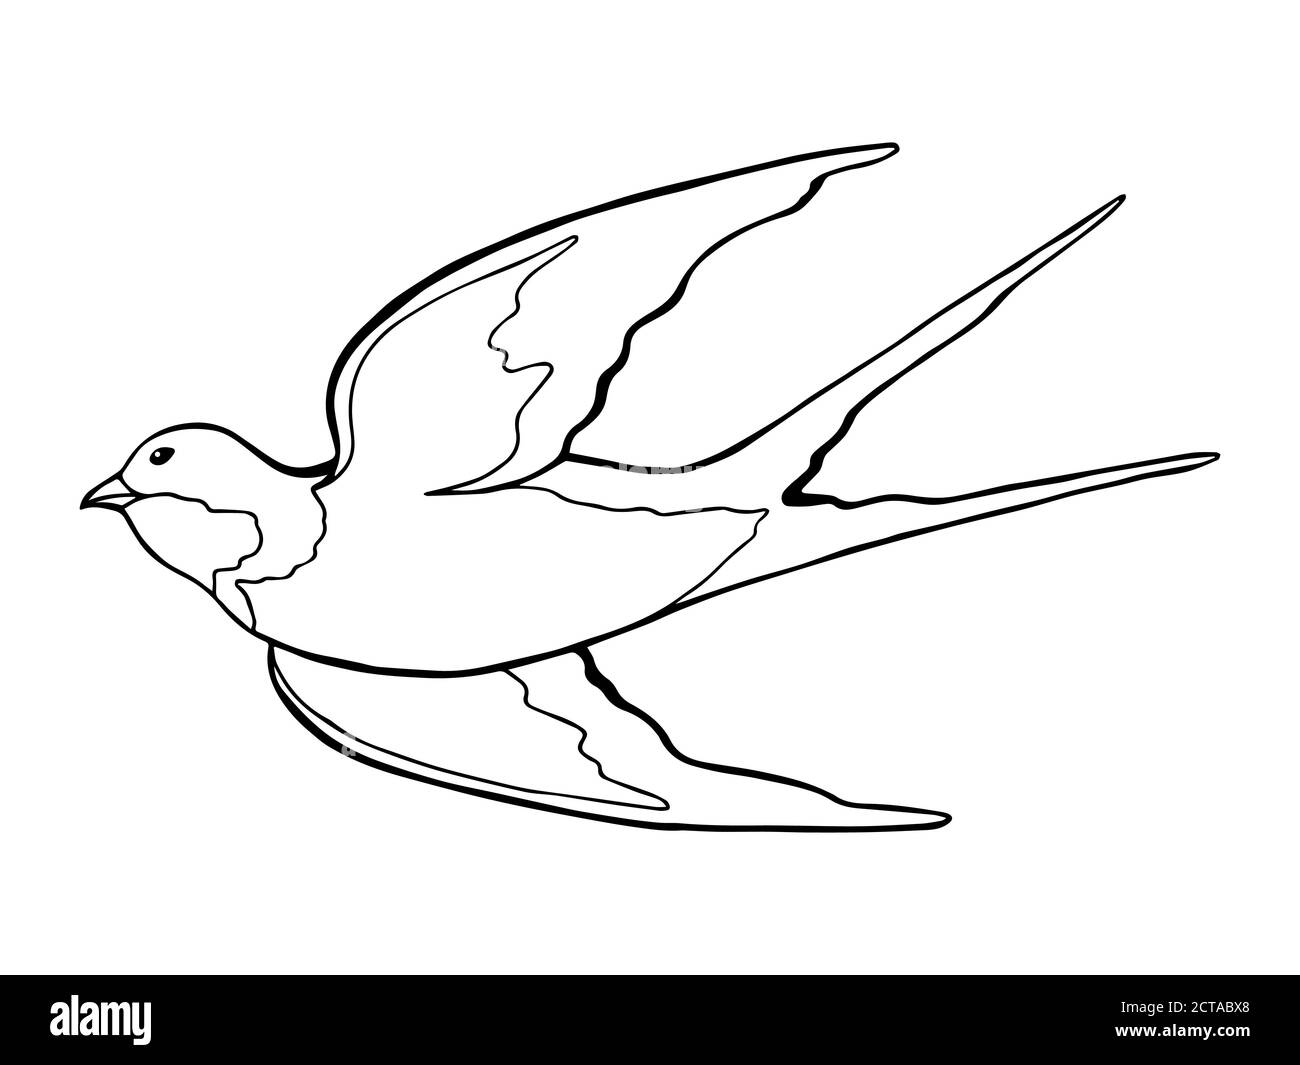 Swallow Vogel schwarz weiß isoliert Skizze Illustration Vektor Stock Vektor